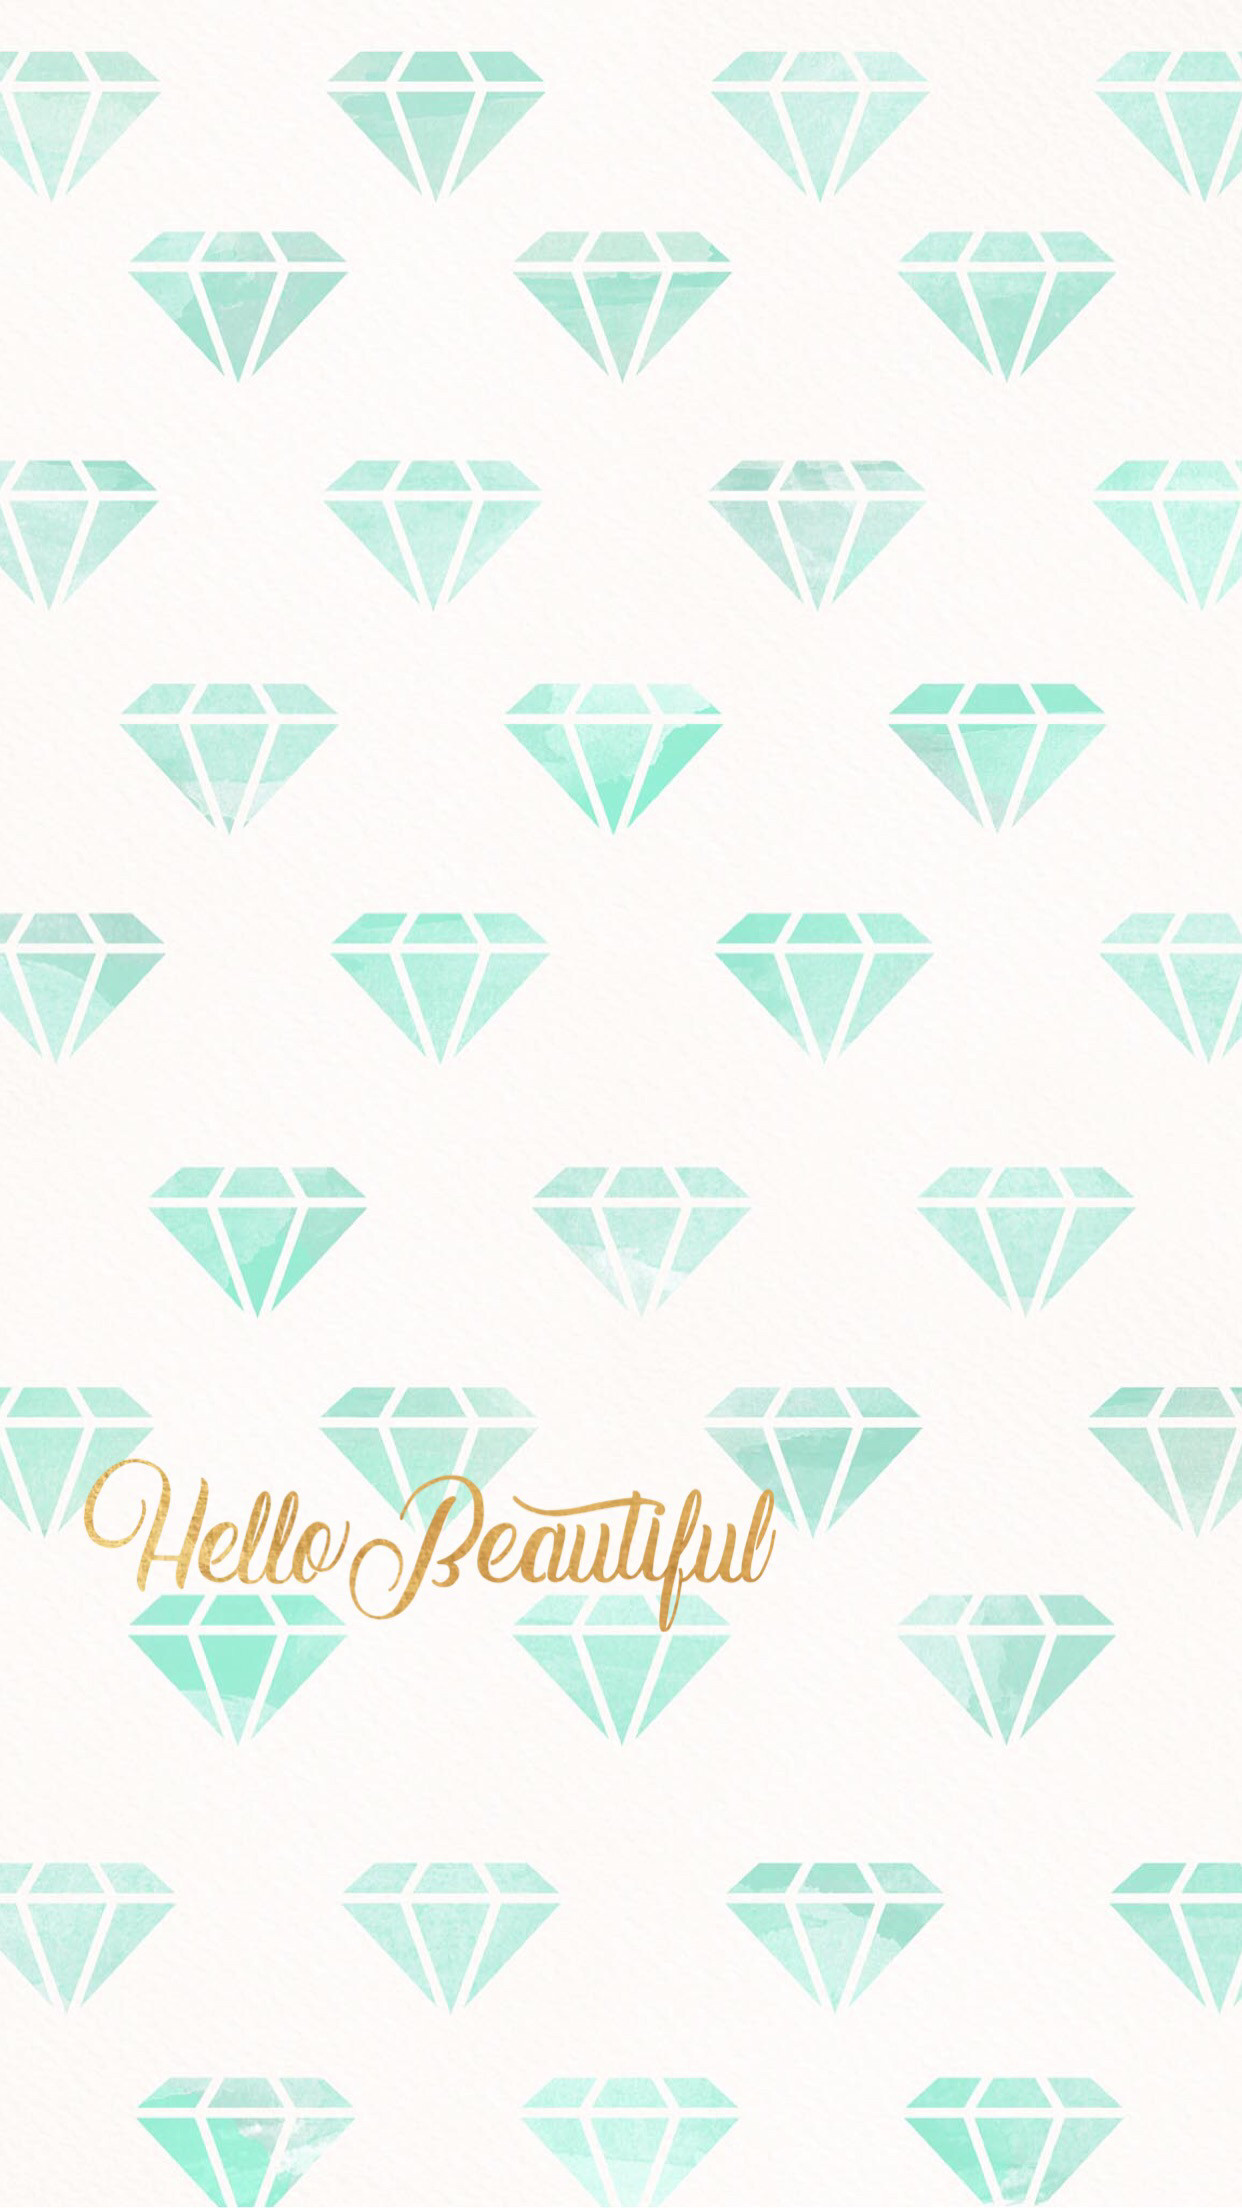 Hello beautiful, wallpaper, background, iPhone, phone, diamond, diamonds, teal